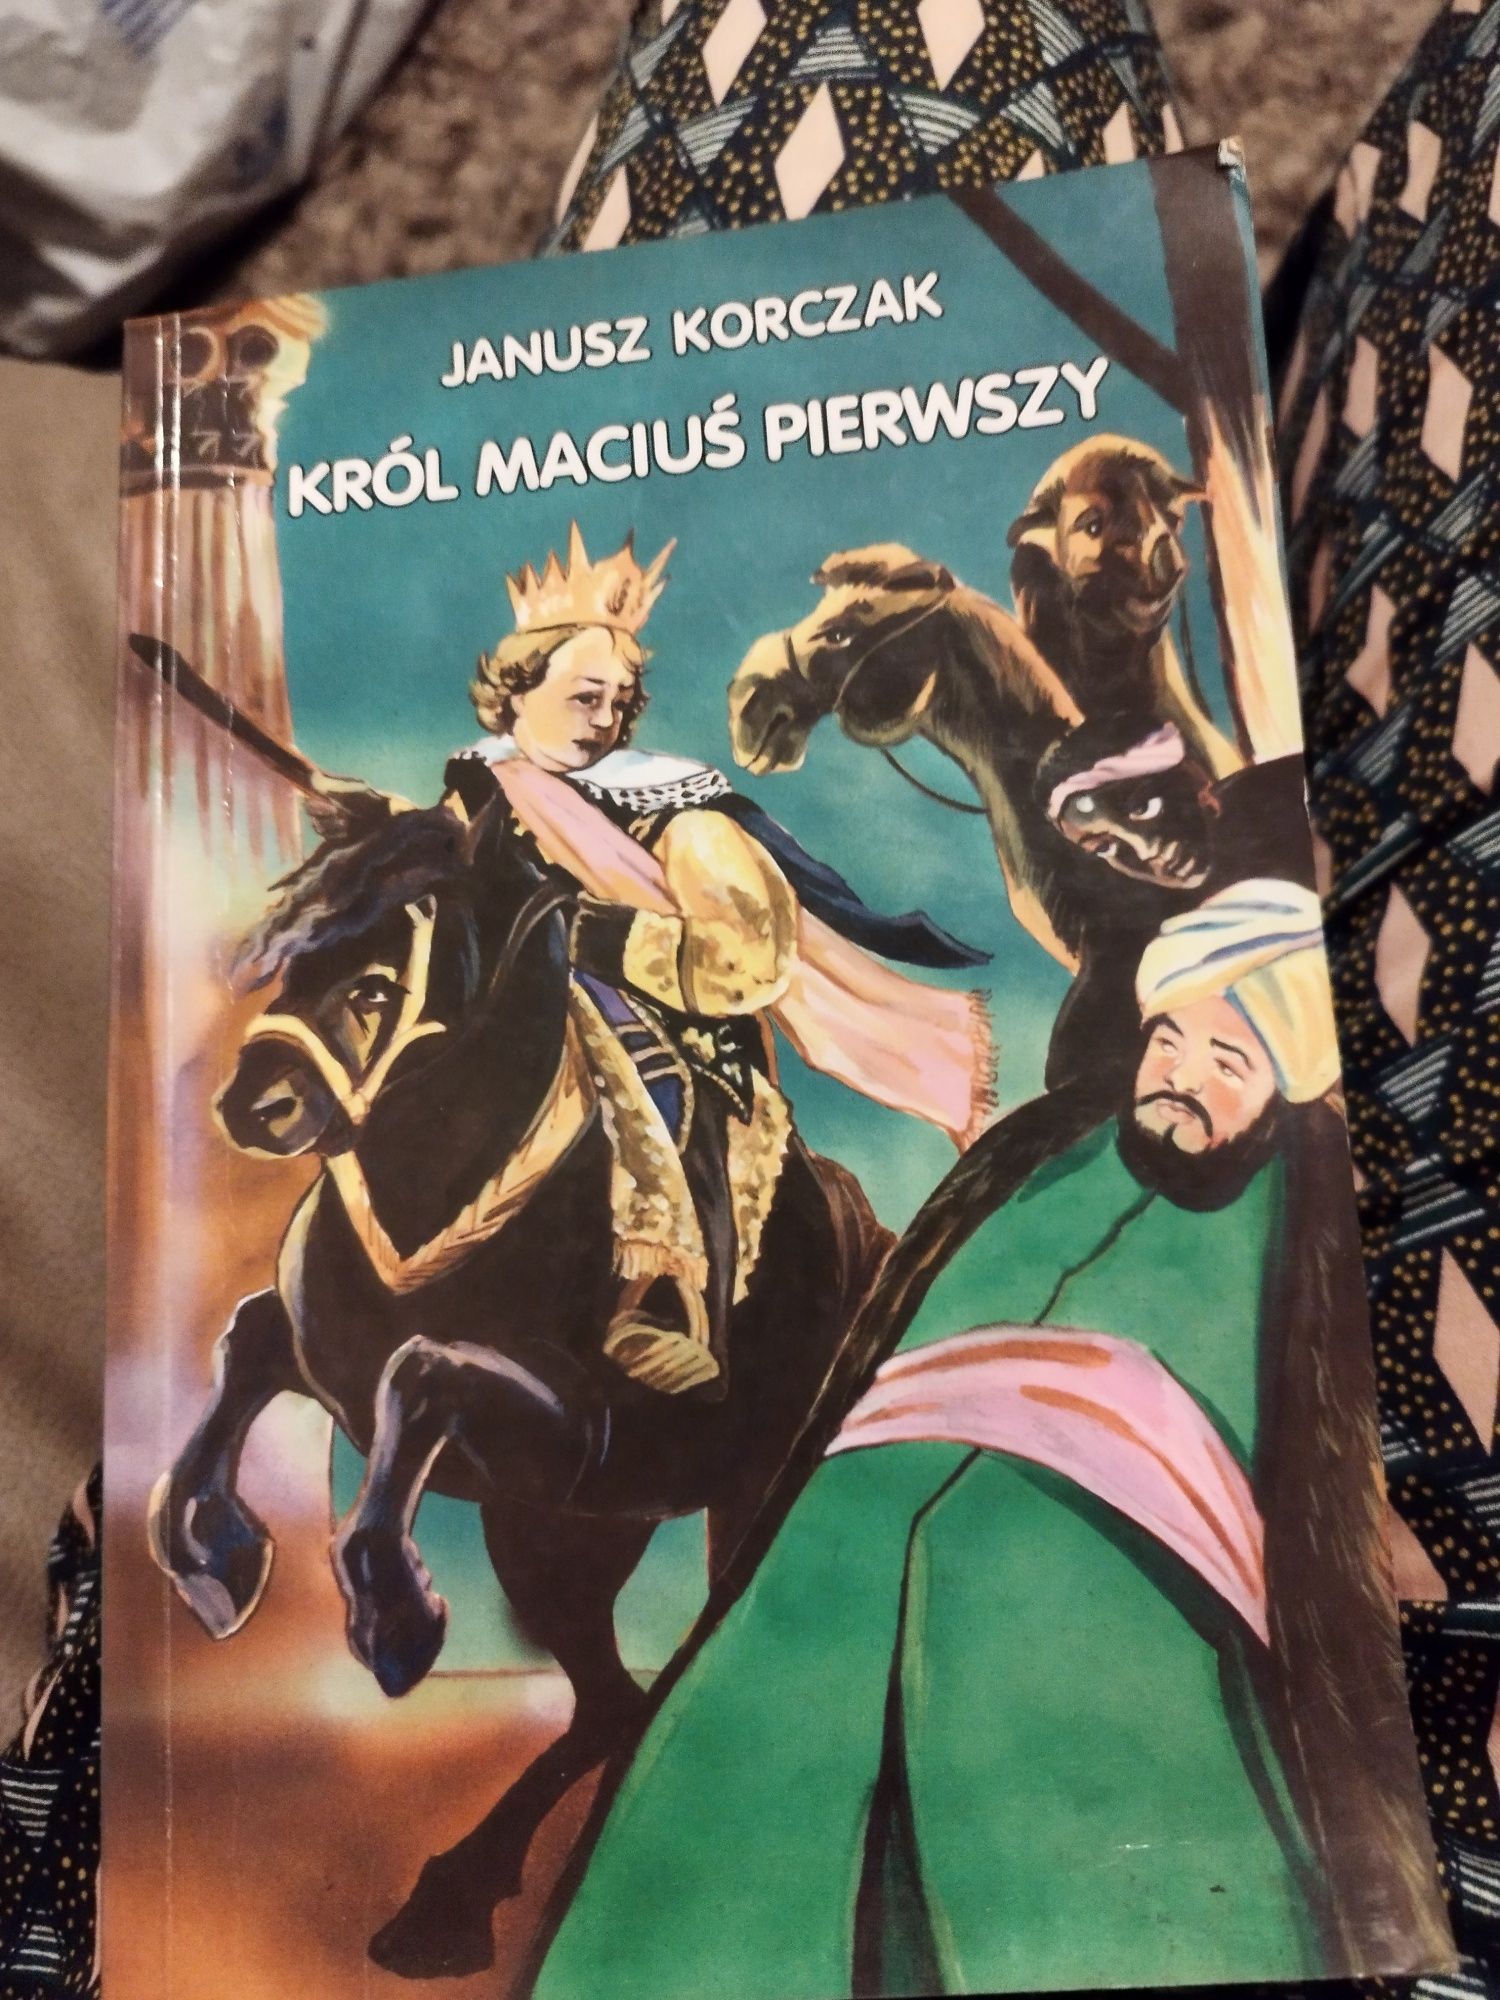 Król Maciuś pierwszy. Janusz Korczak